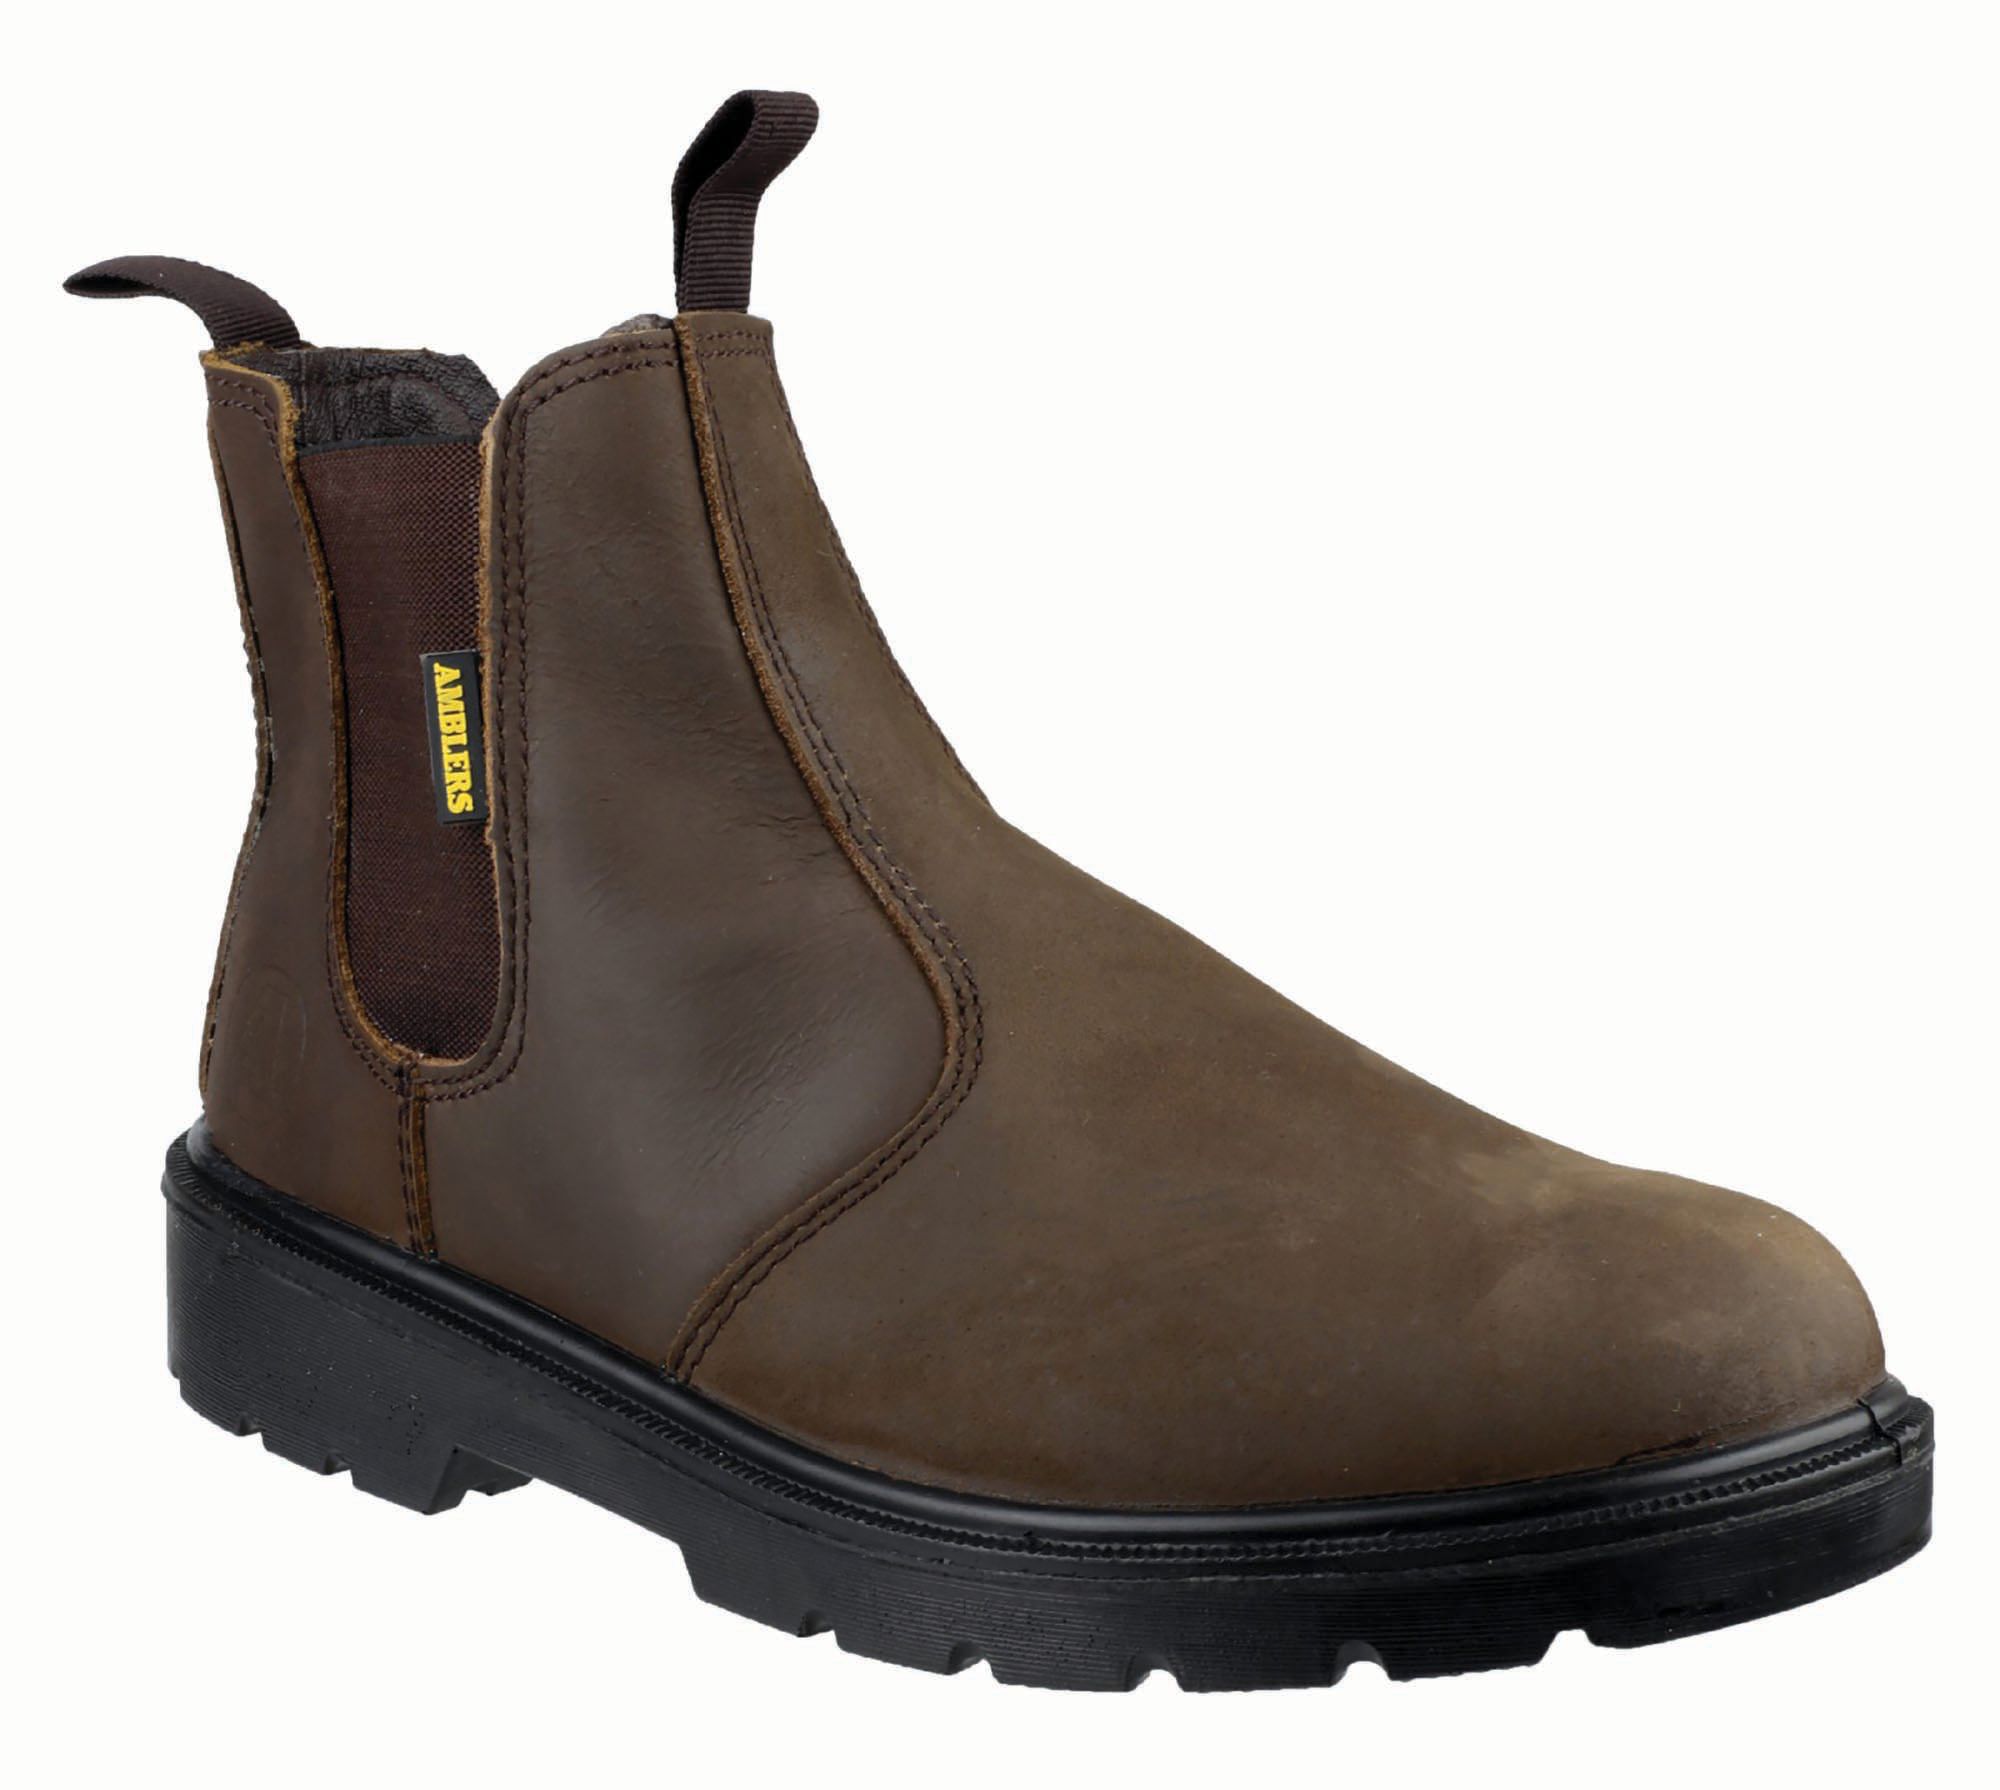 Image of Amblers Safety FS128 Dealer Safety Boot - Brown Size 11